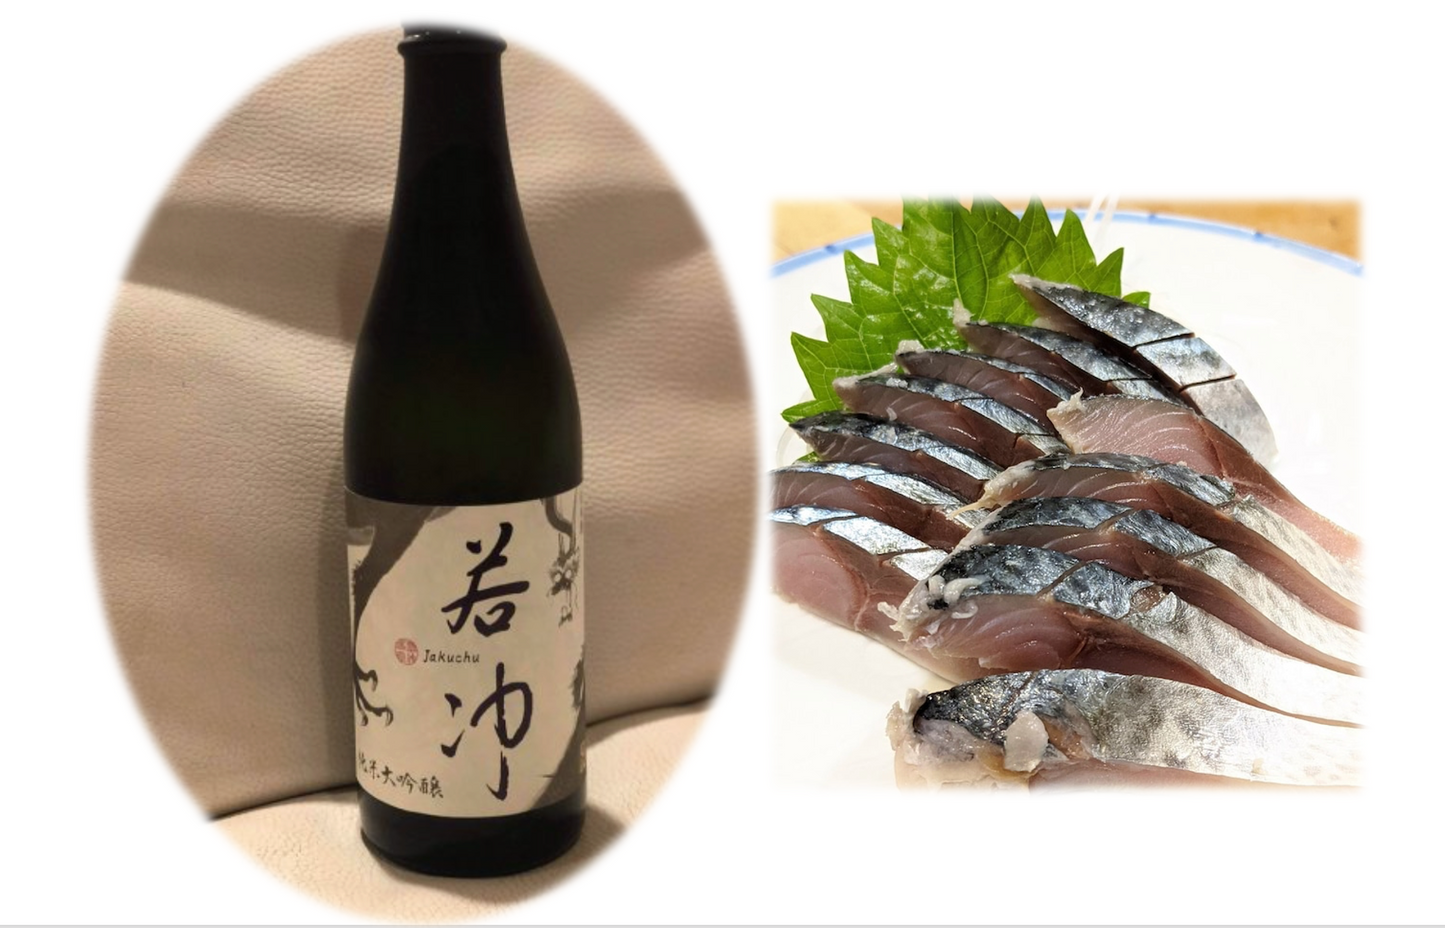 [Home Drinking Yokocho Collaboration] Jakuchu Junmai Daiginjo Unrefined Sake Taniguchi Sake Brewery & "Home Drinking Yokocho" Snack Set 2 <Finish at Home>